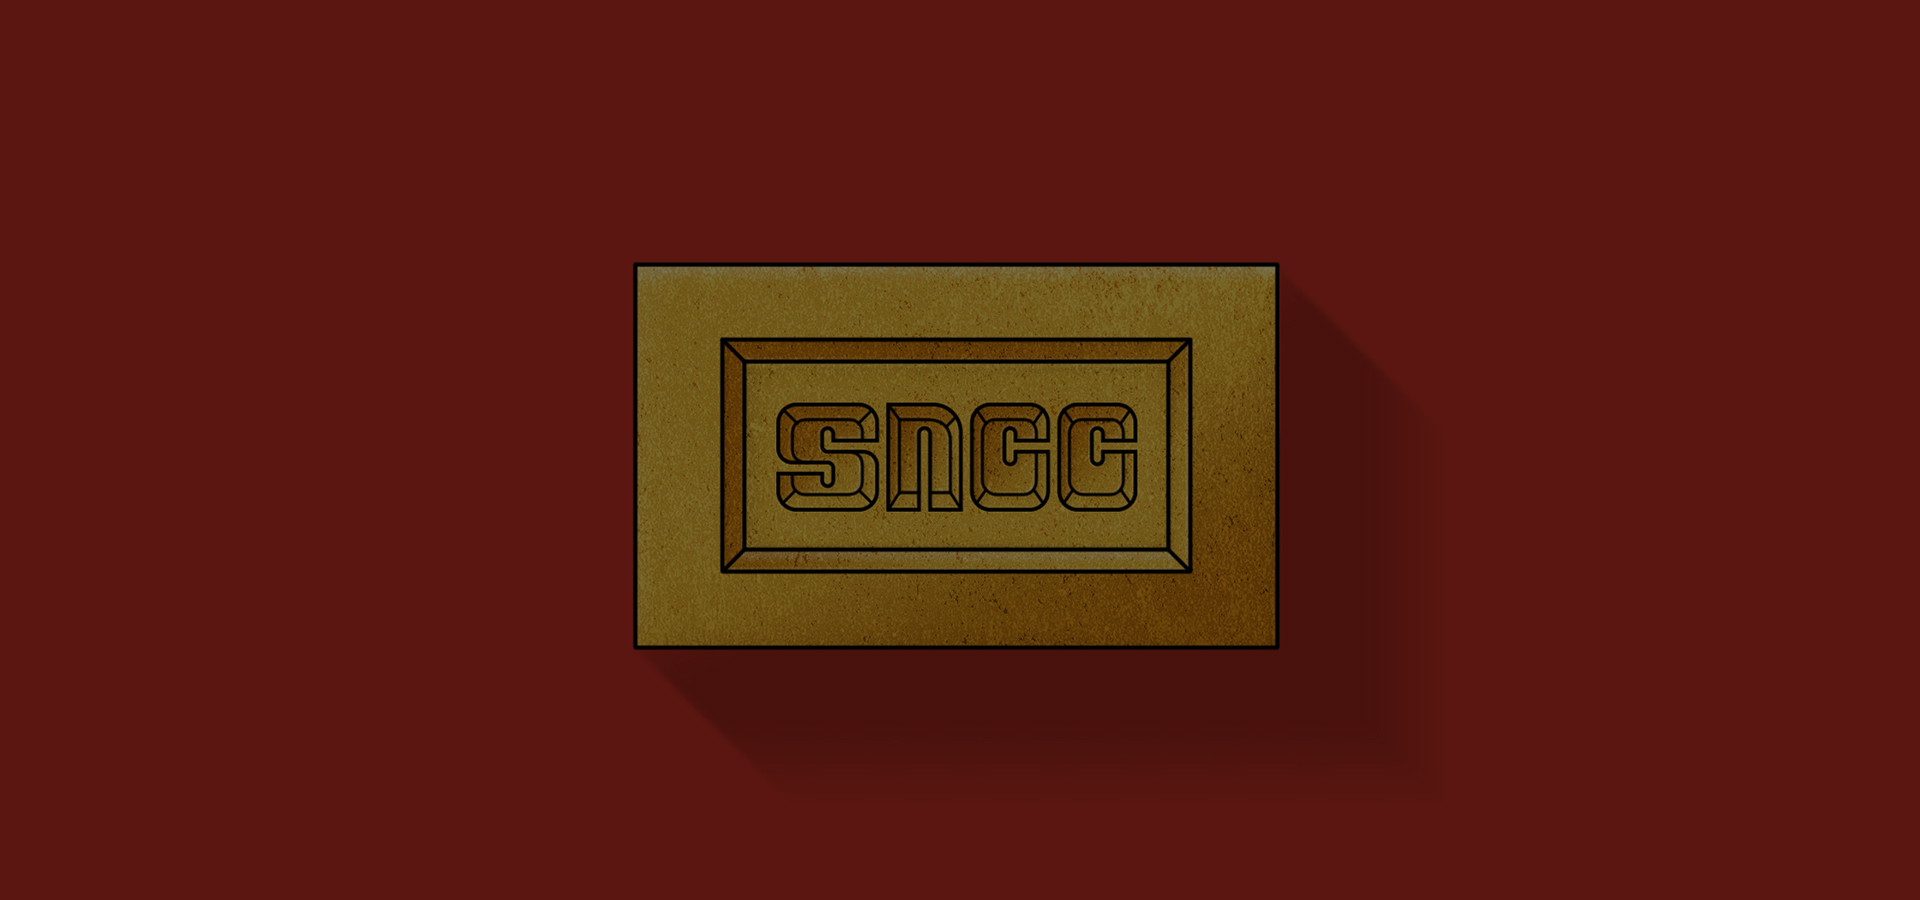 Sncc Announcement Banner Bricks